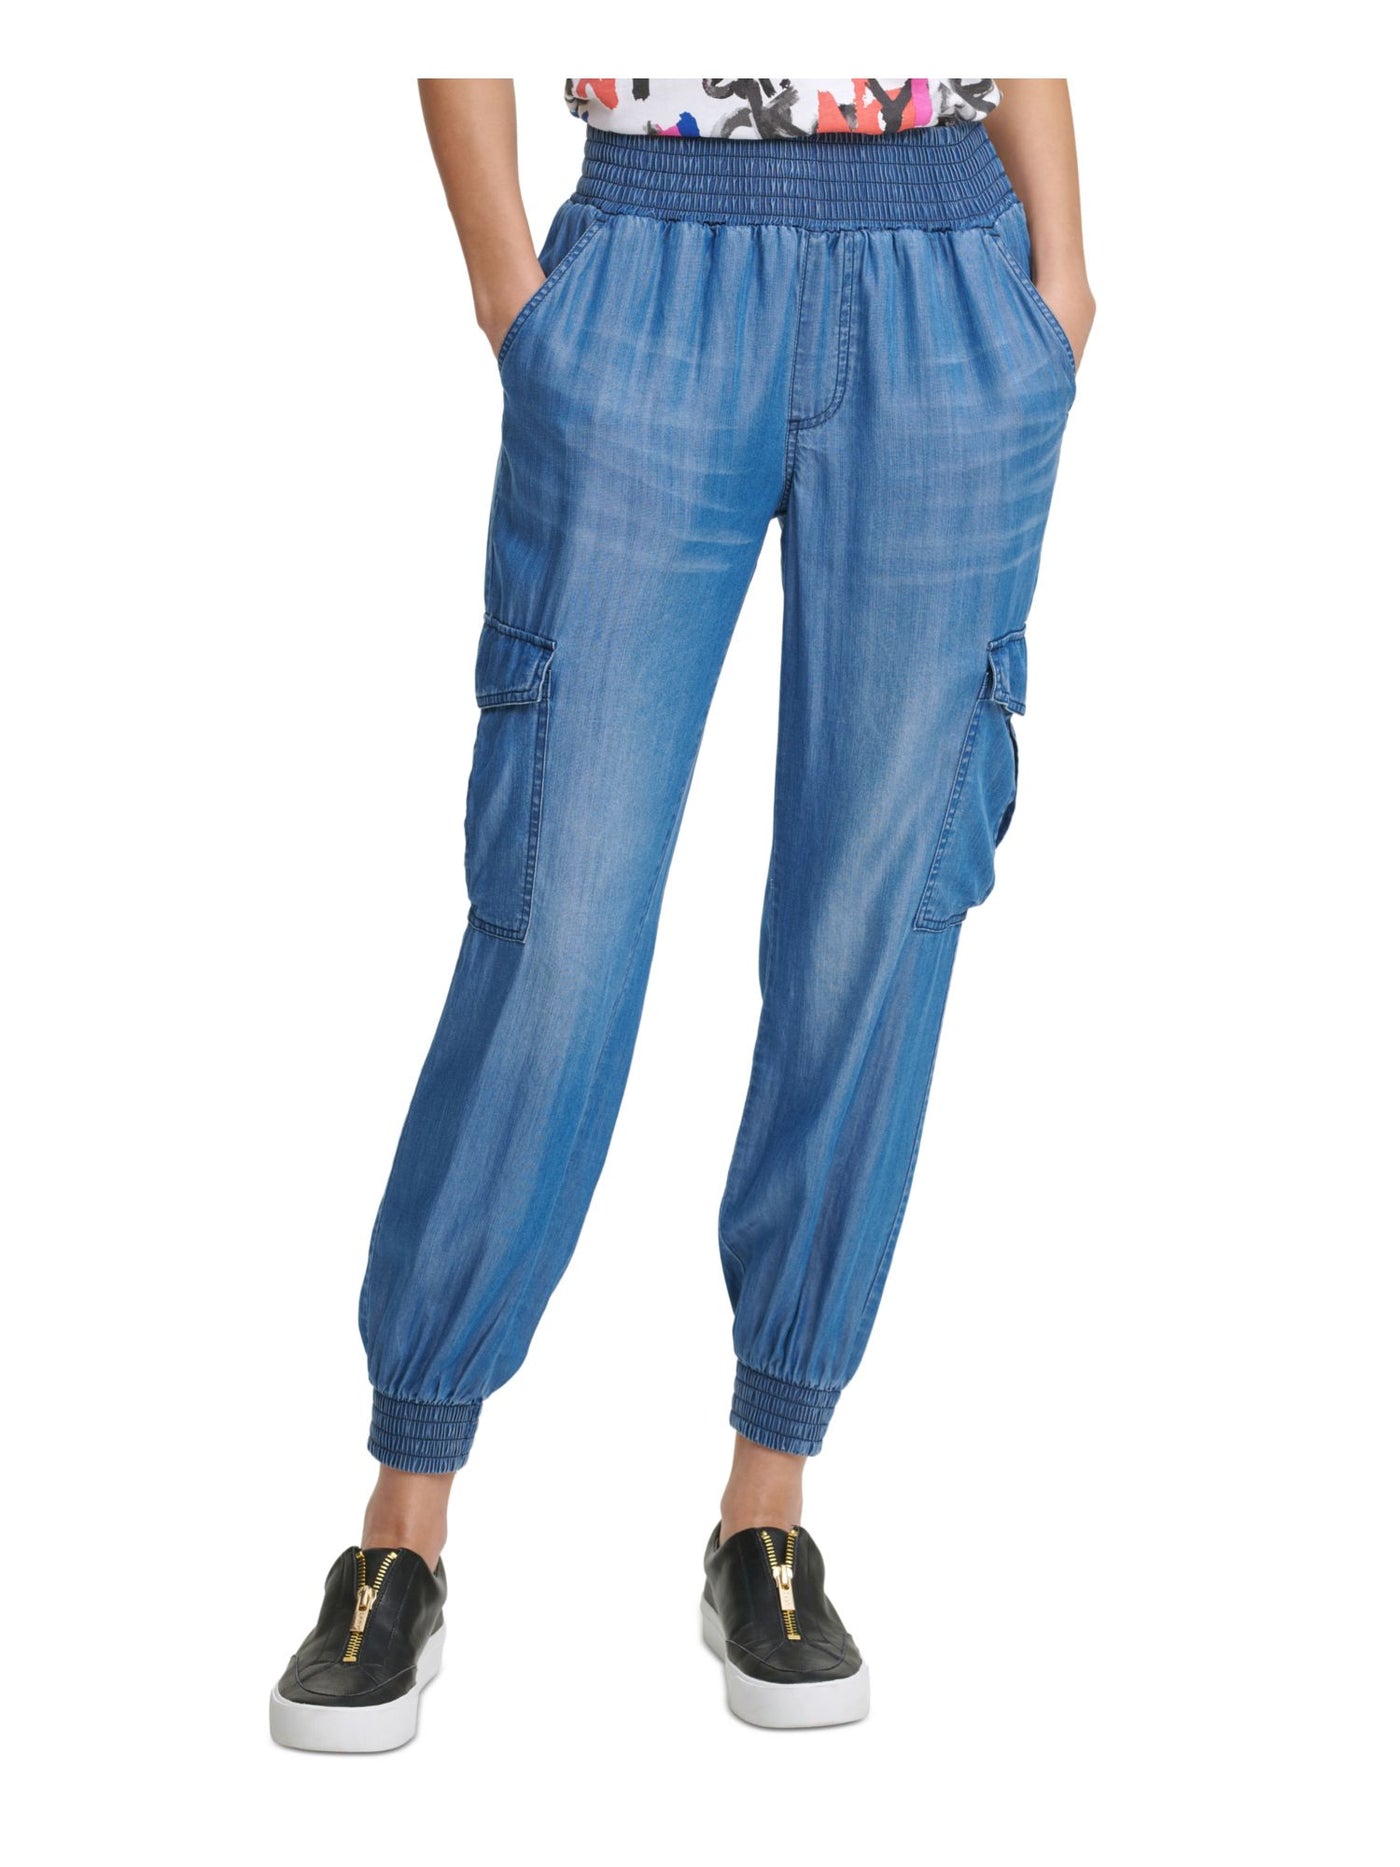 DKNY JEANS Womens Blue Cuffed Pants S